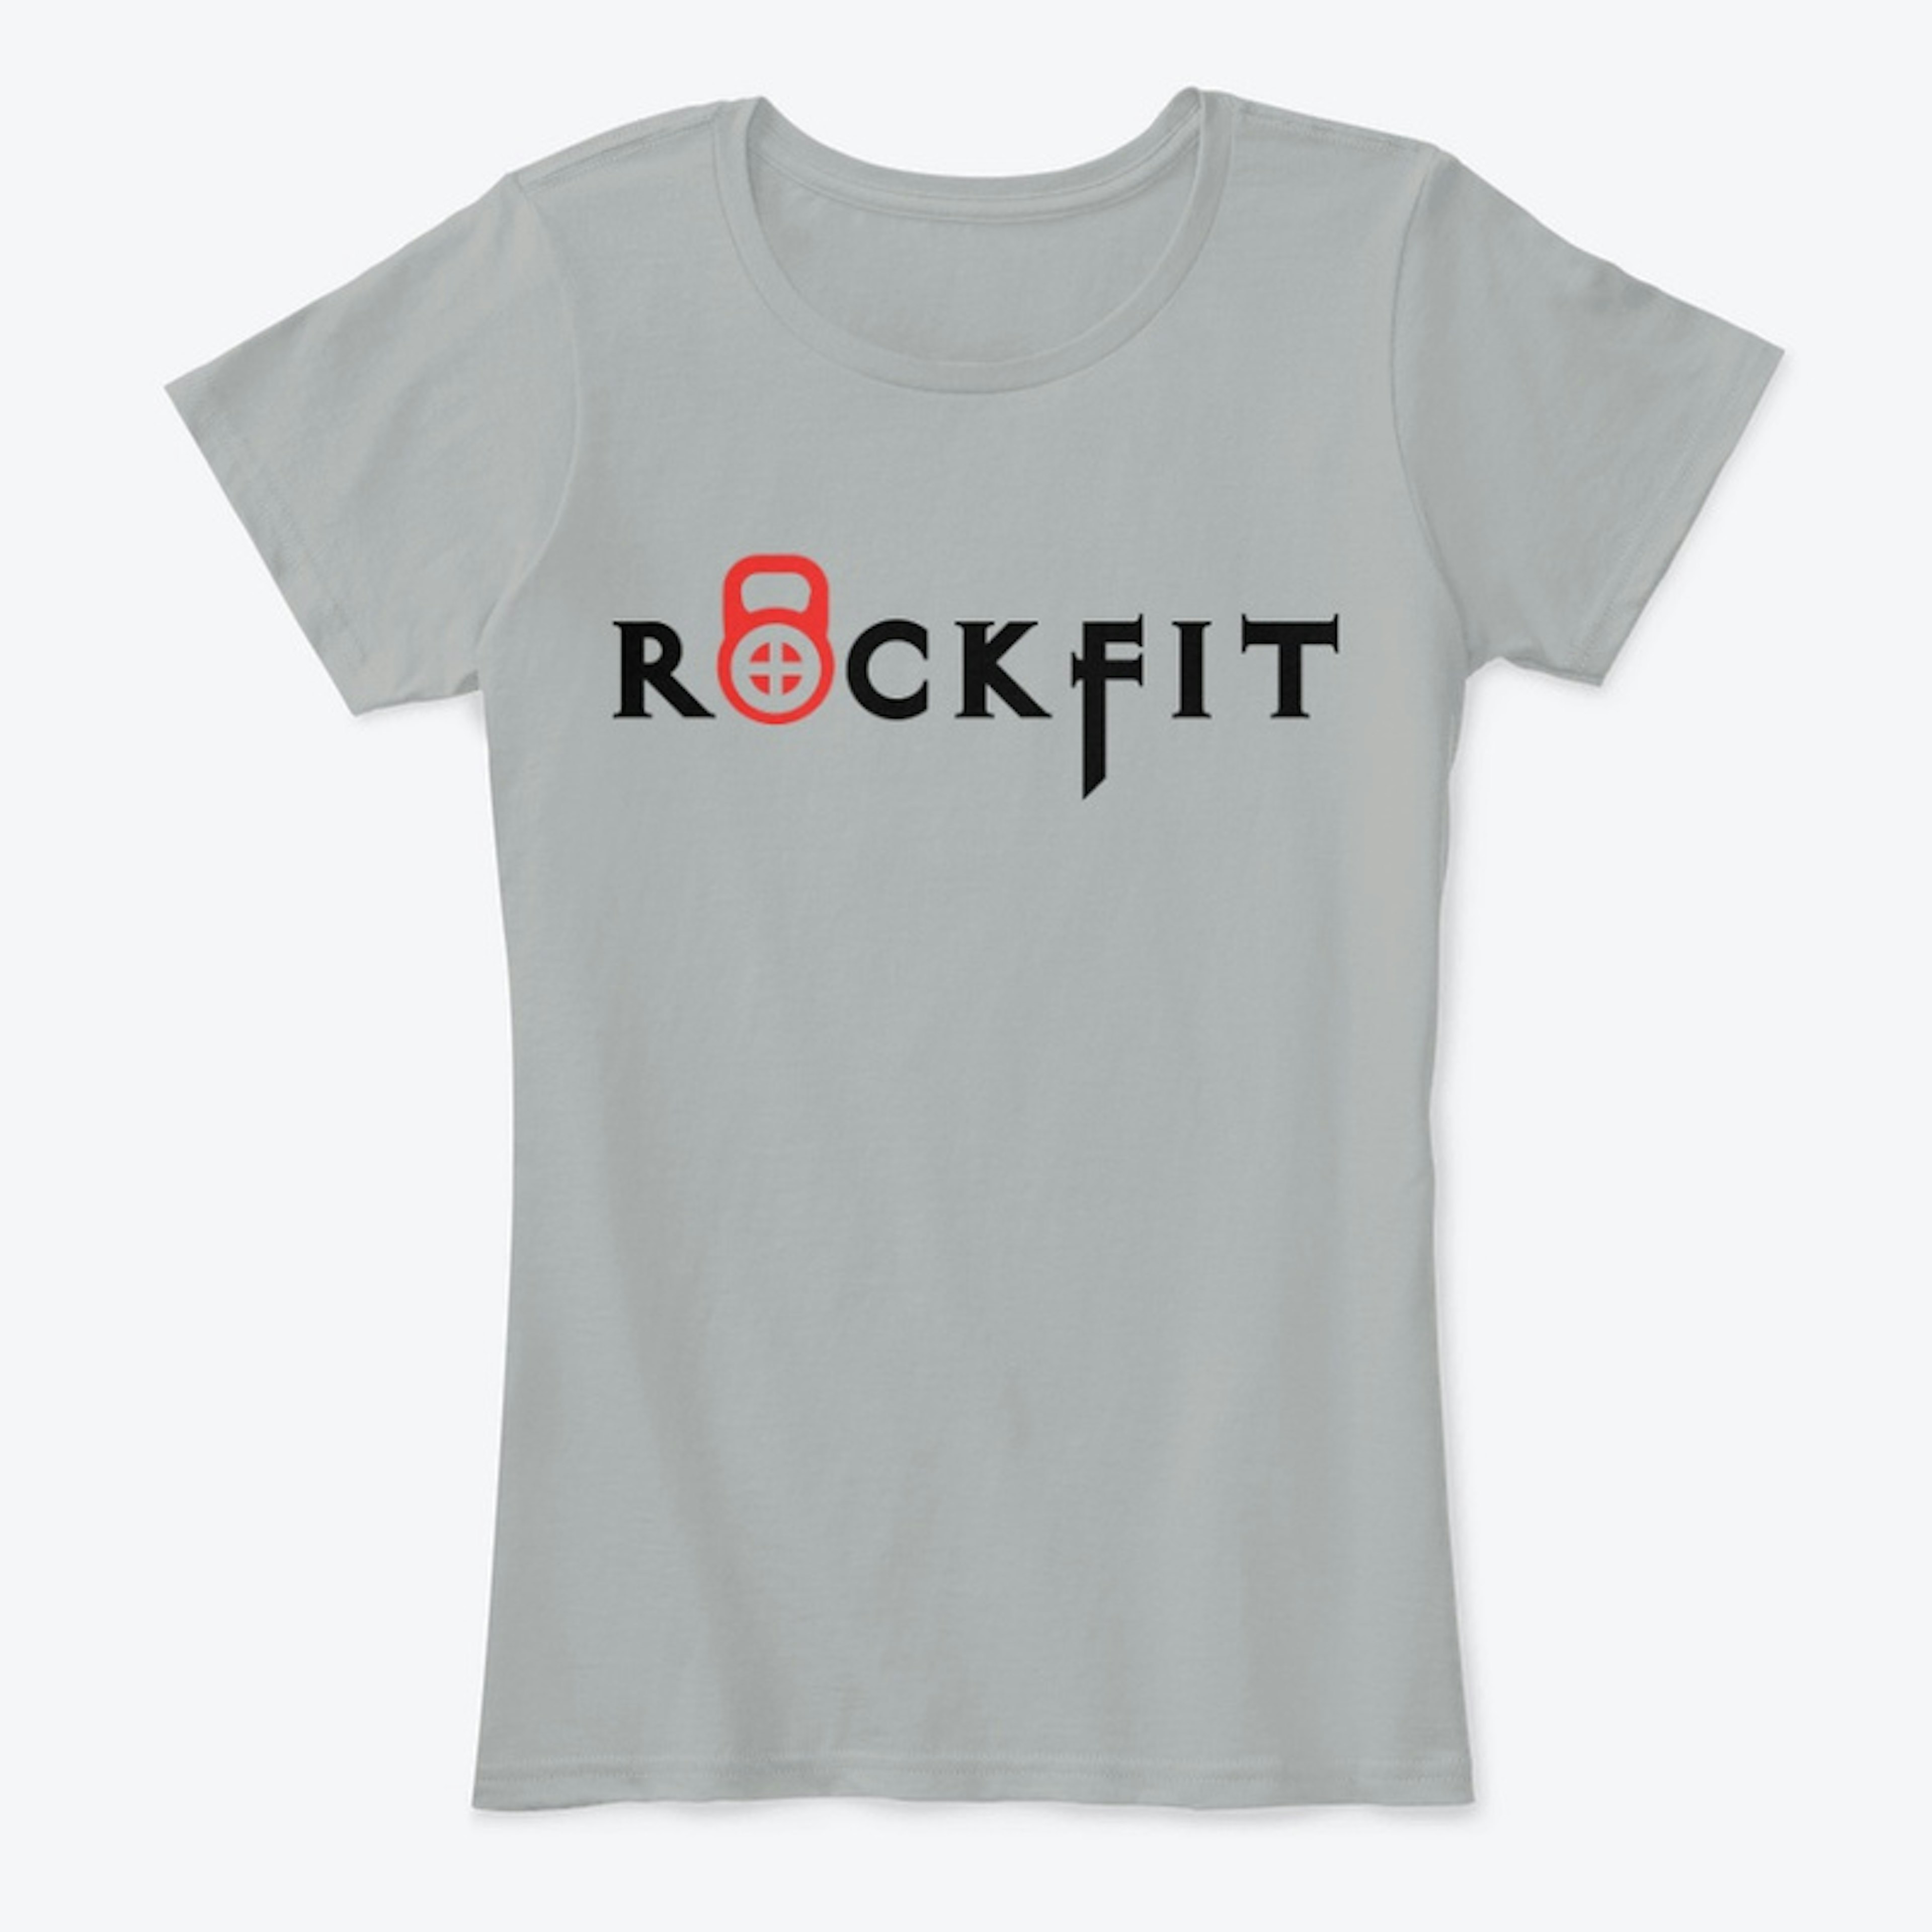 Rockfit Women's Grey T-Shirt